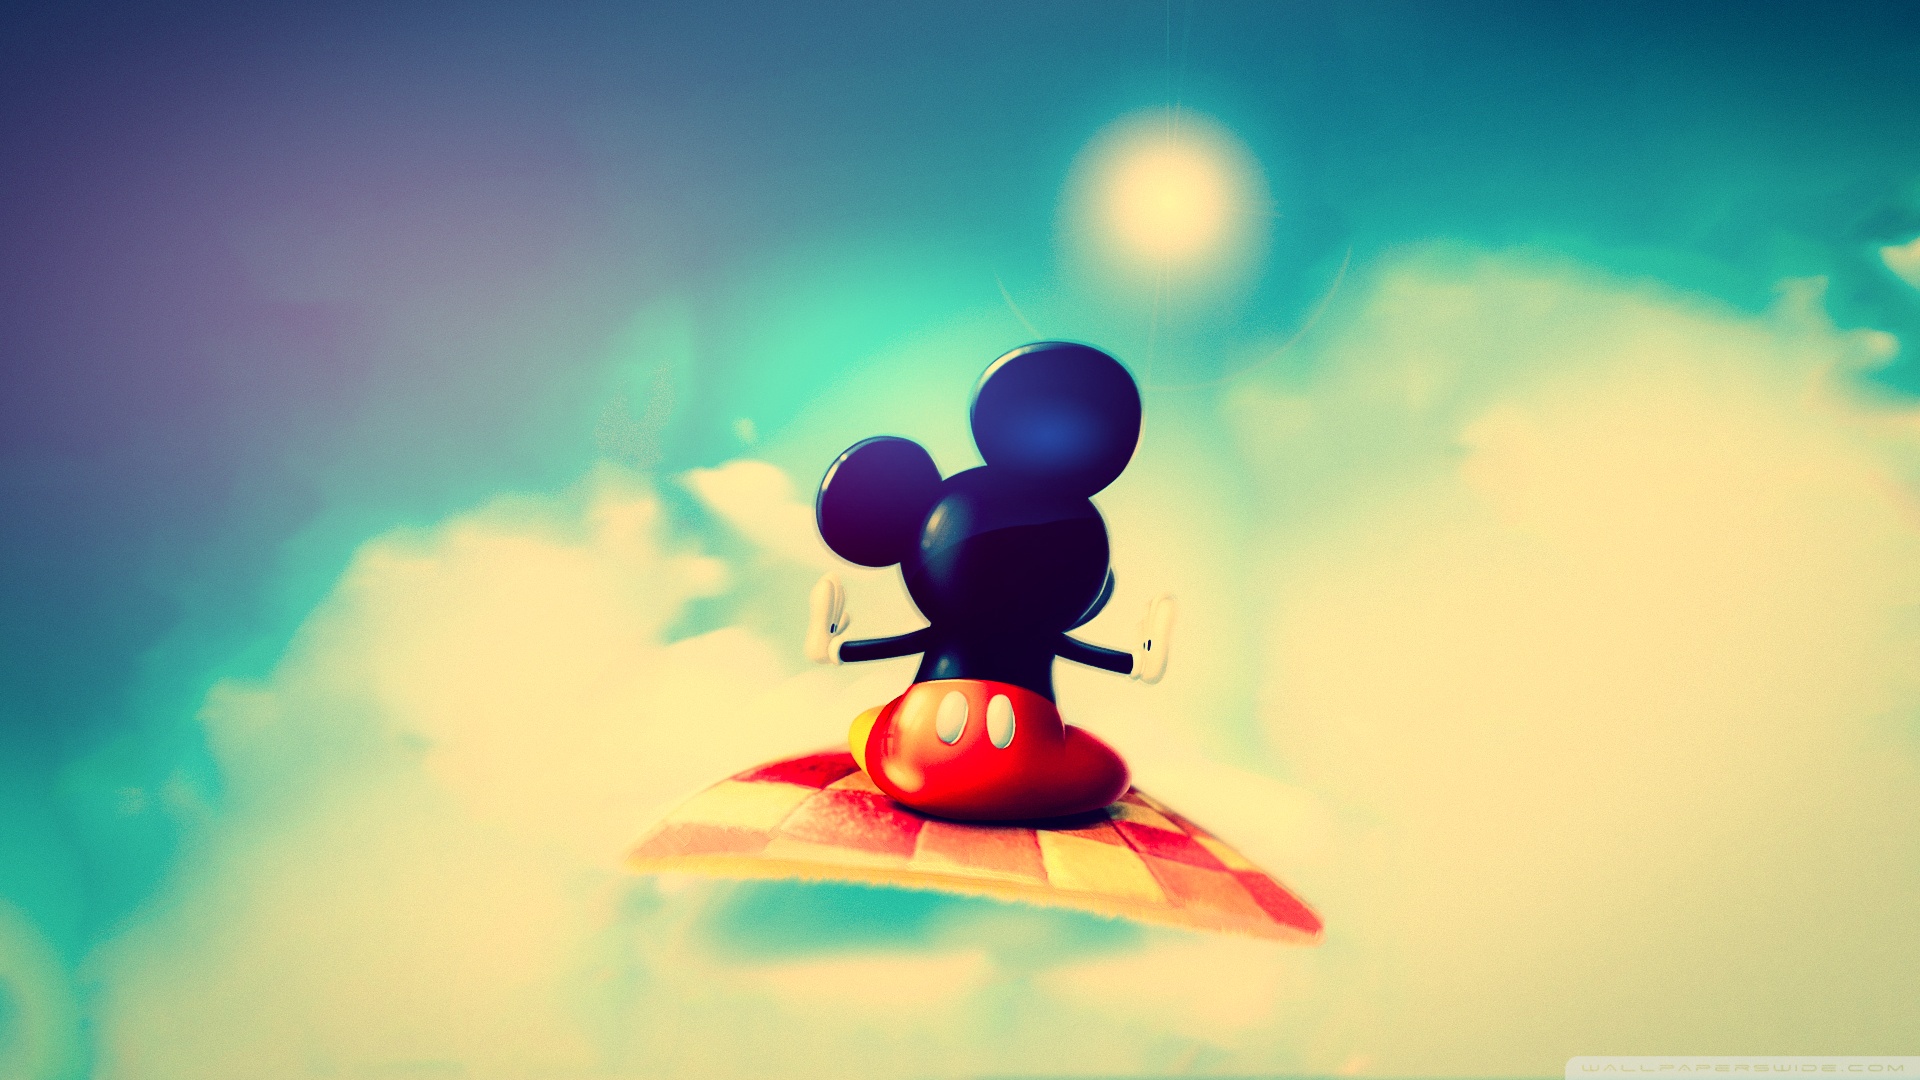 48+] Cute Mickey Mouse iPhone Wallpaper - WallpaperSafari